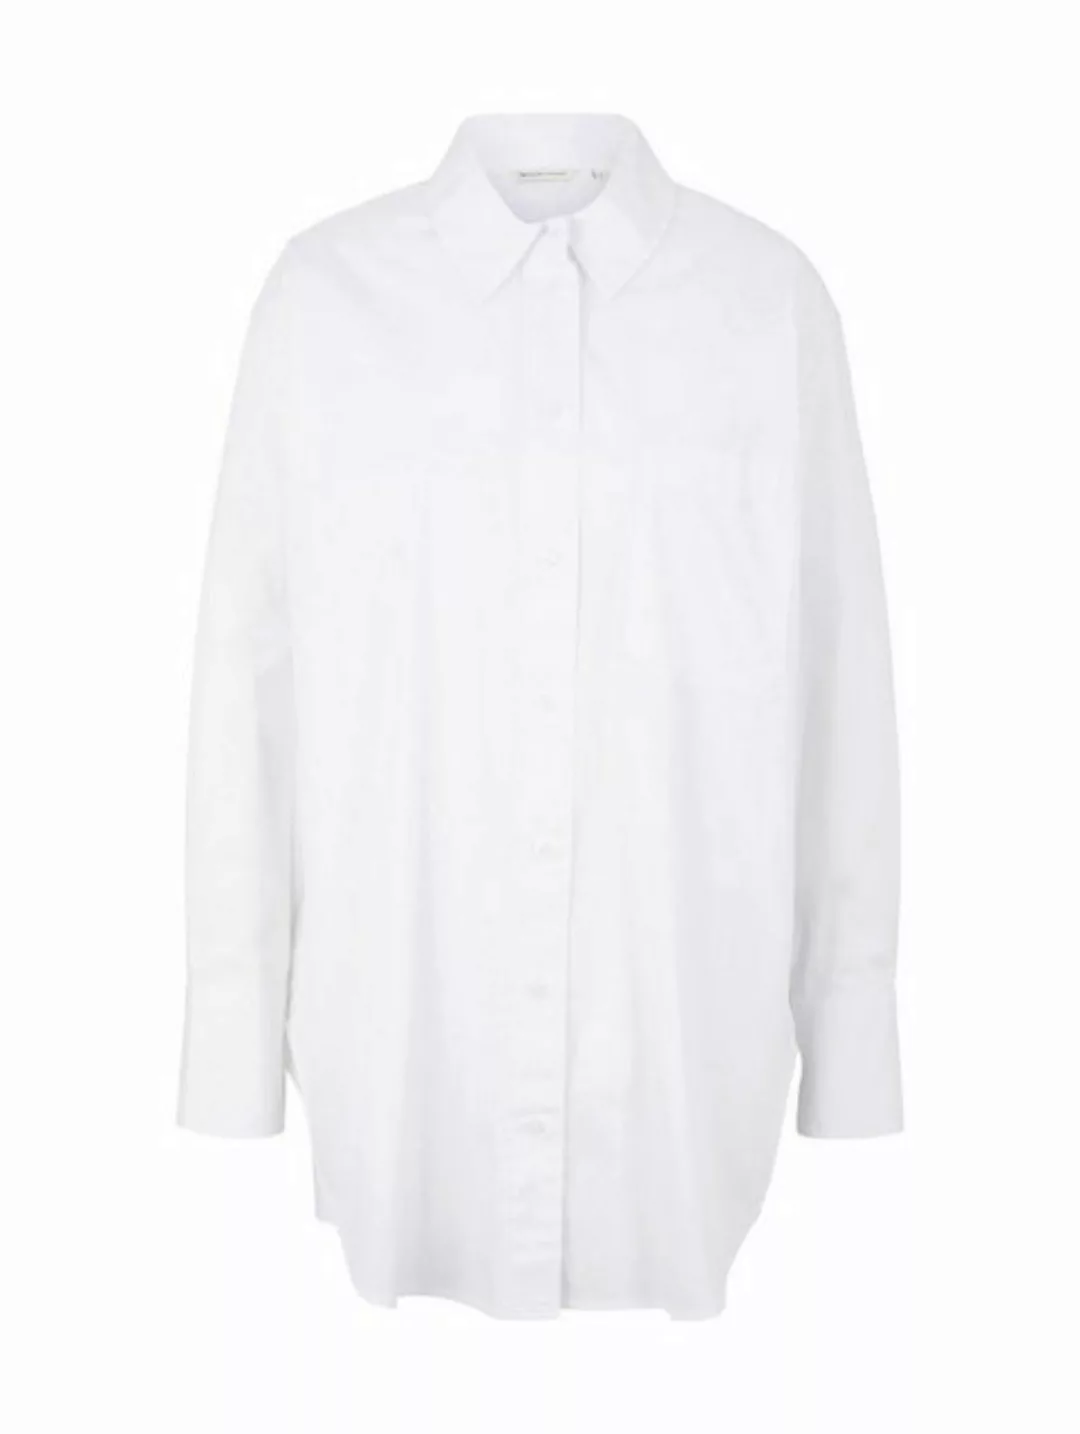 TOM TAILOR Denim T-Shirt long shirt with chest pocket, White günstig online kaufen